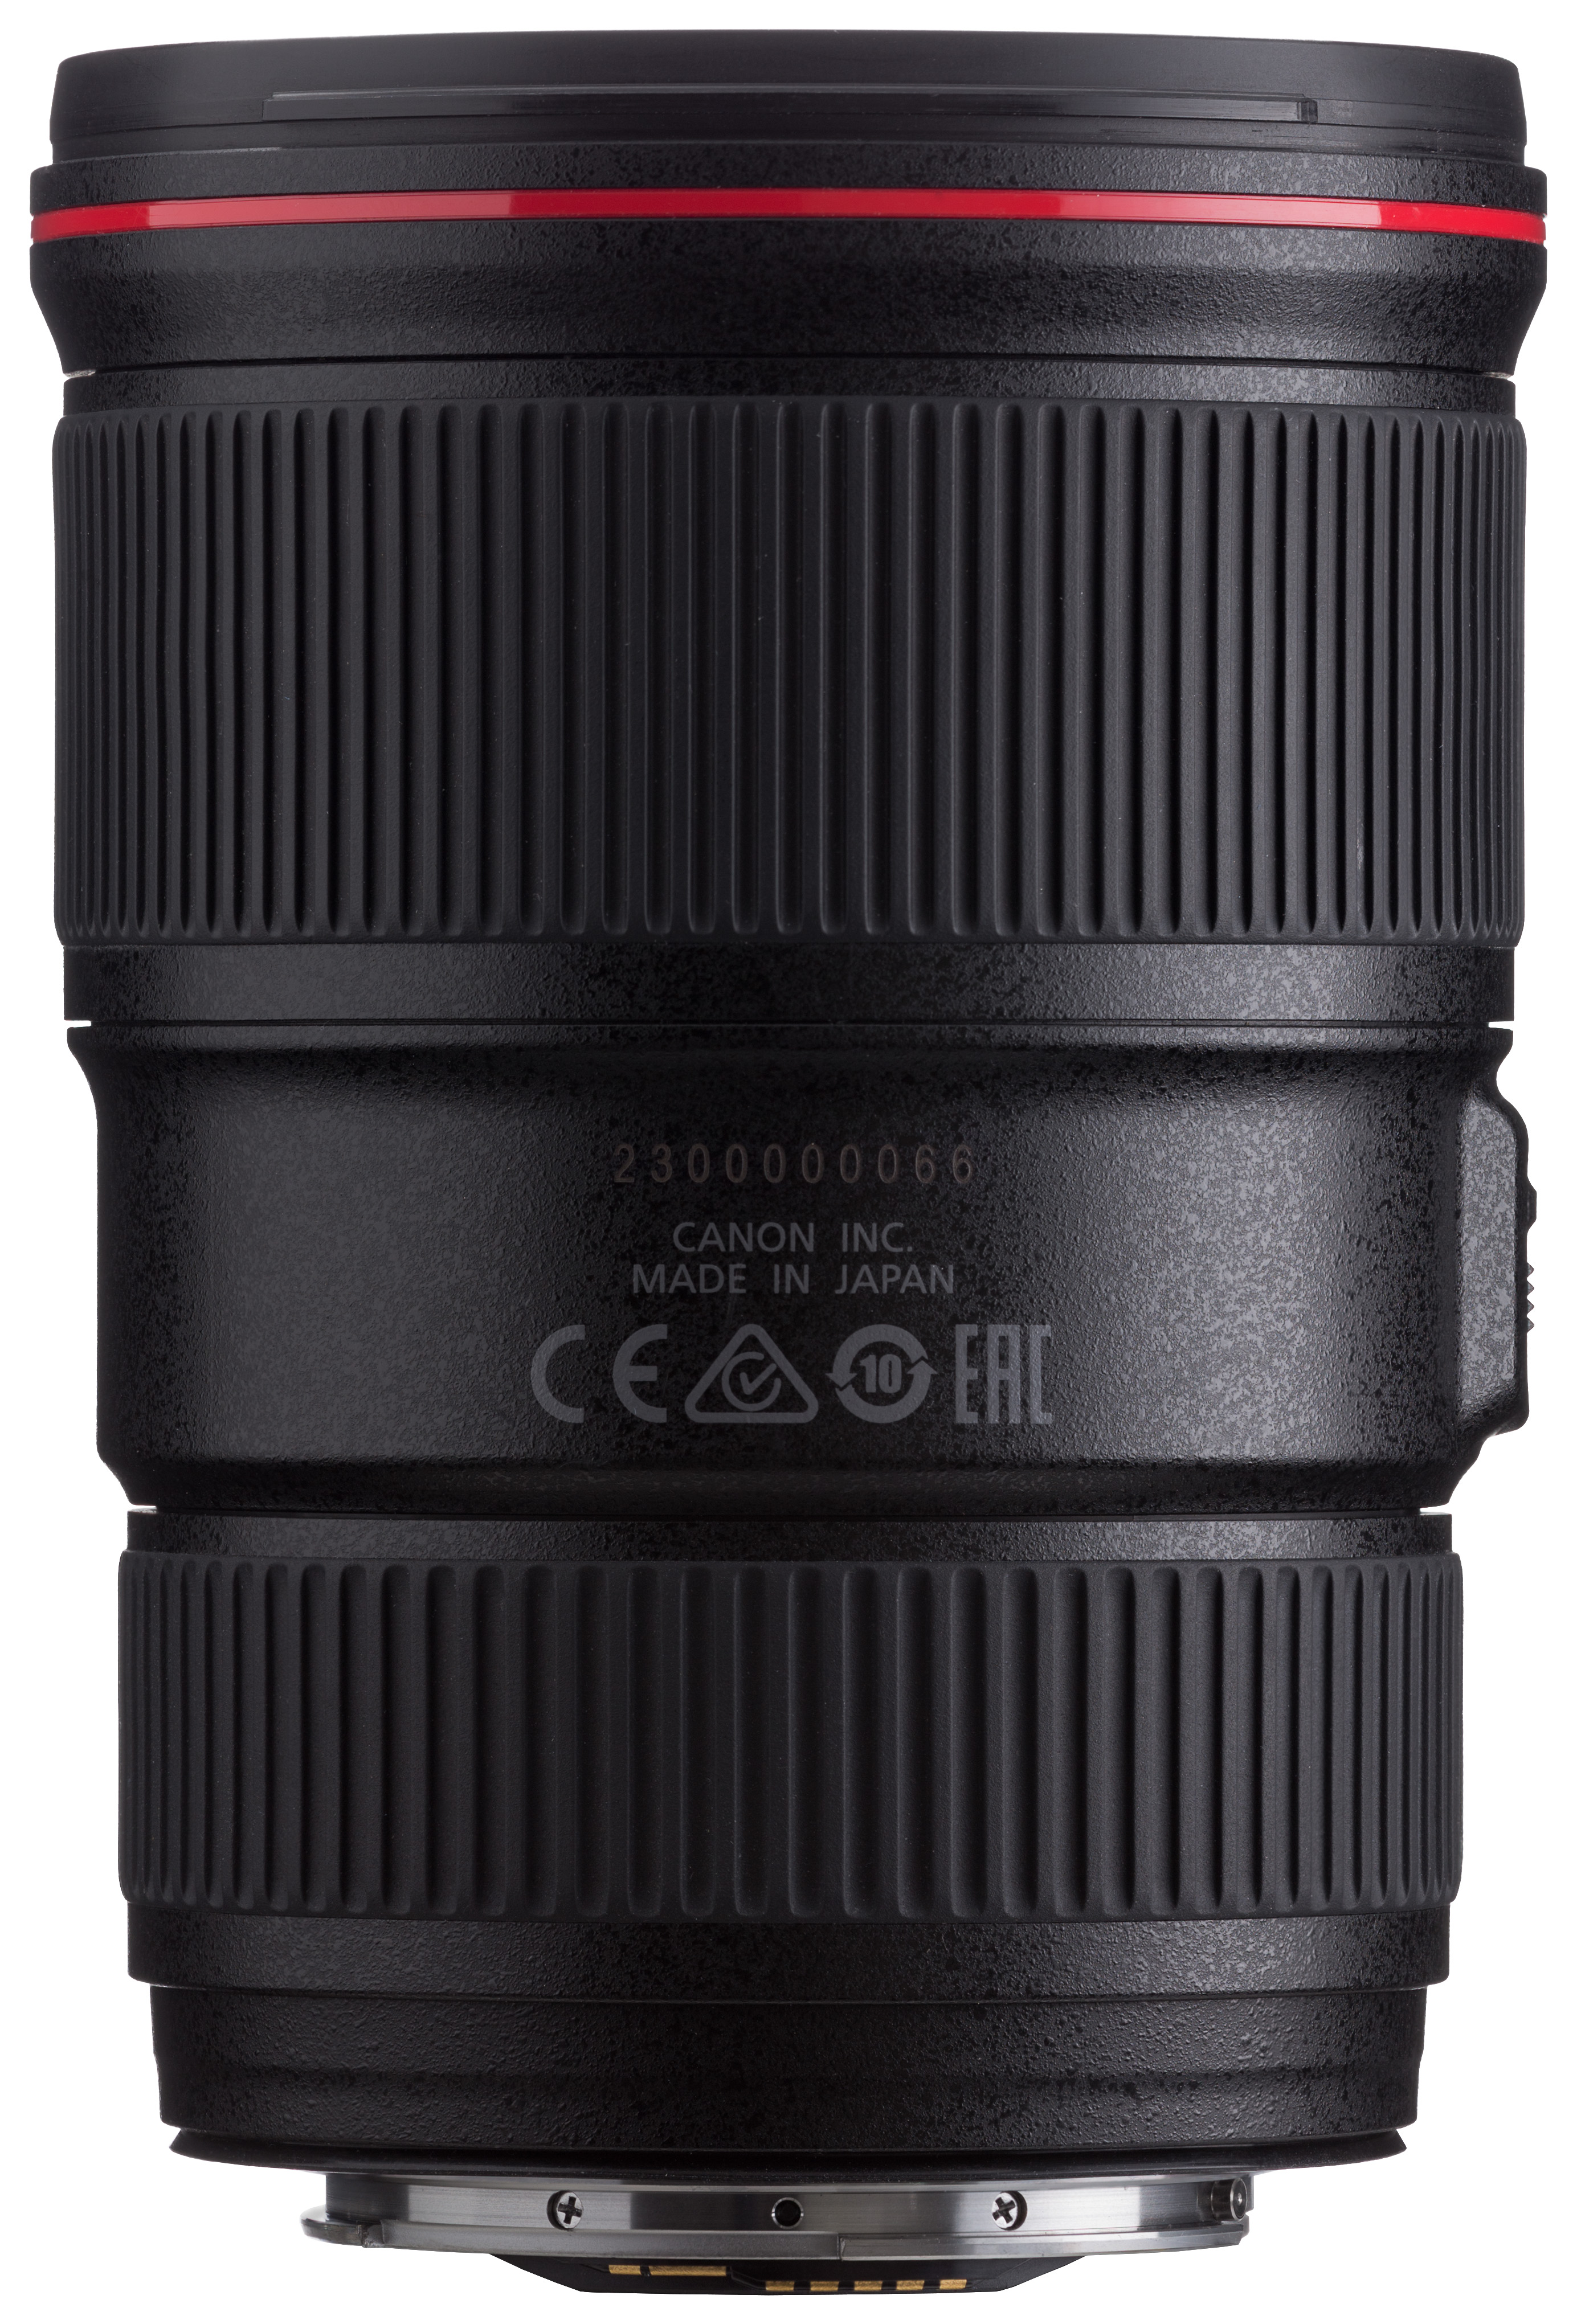 Canon EF 16-35mm f4L IS USM back horizontal